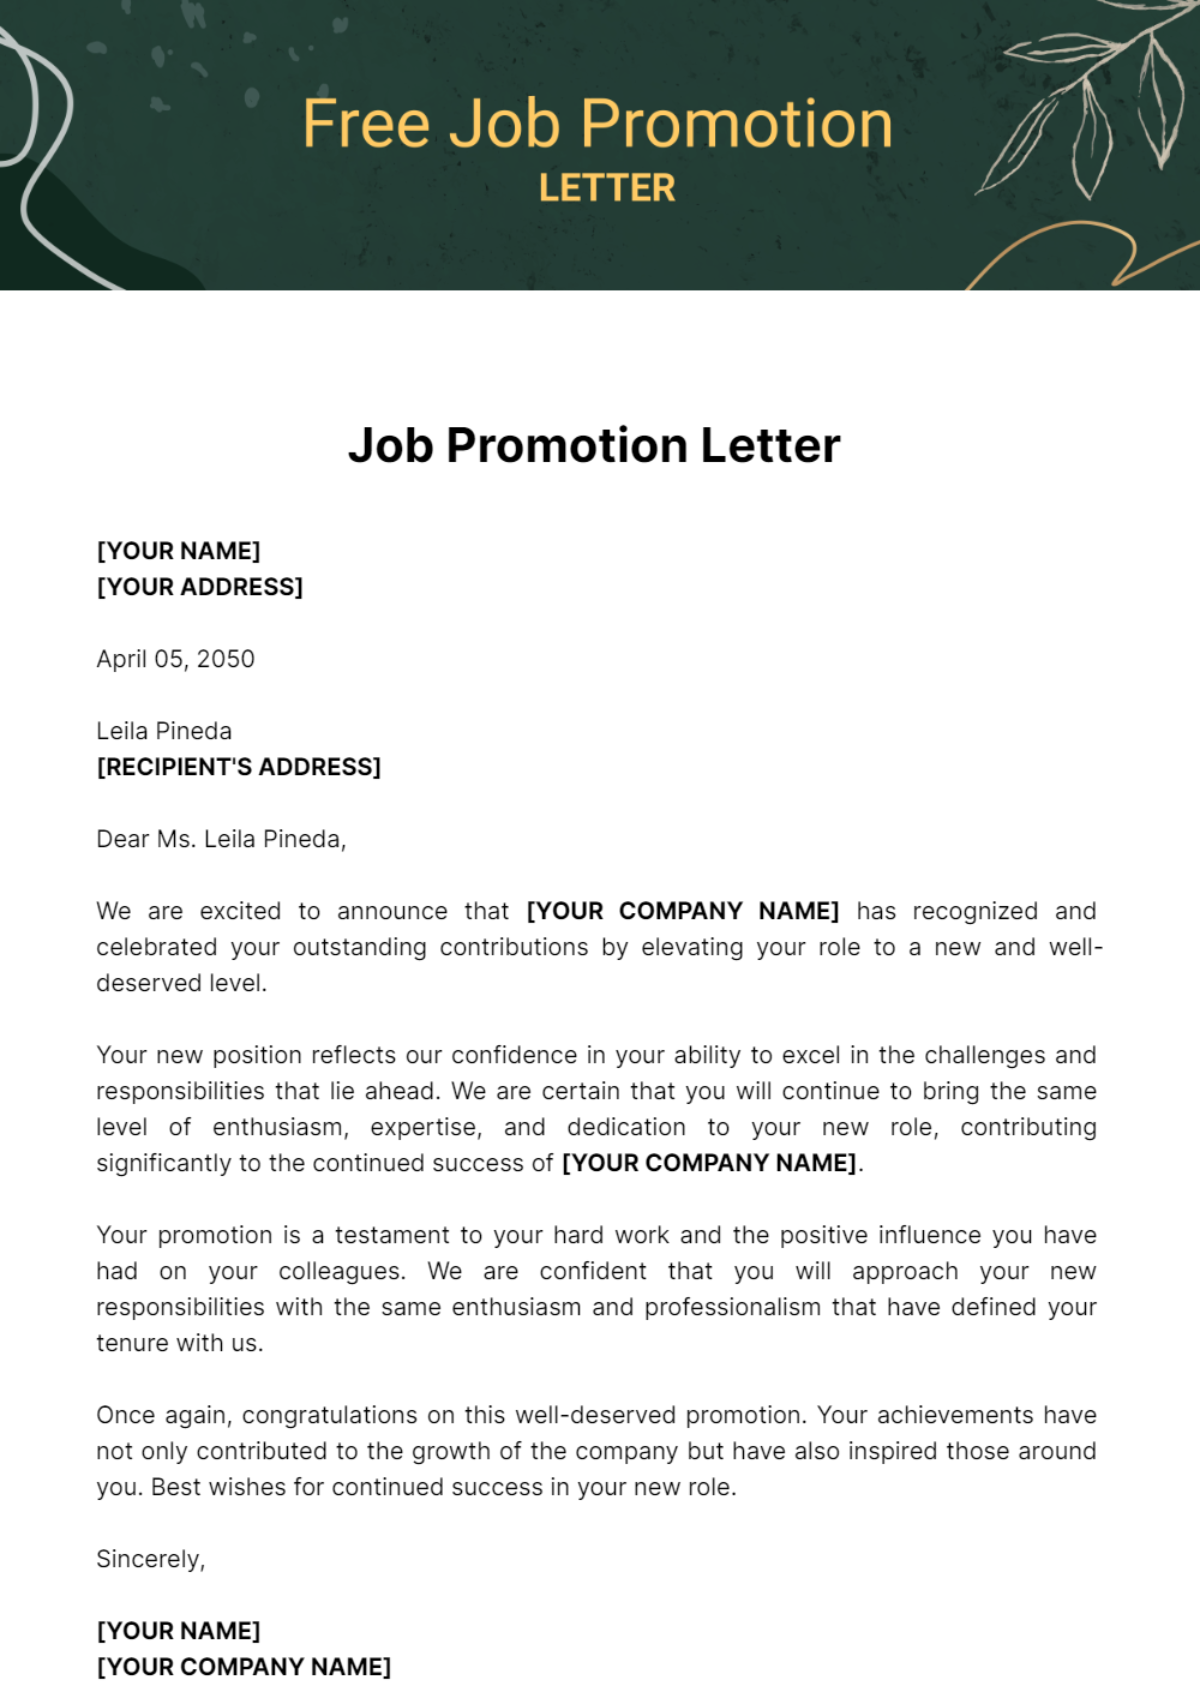 Job Promotion Letter Template